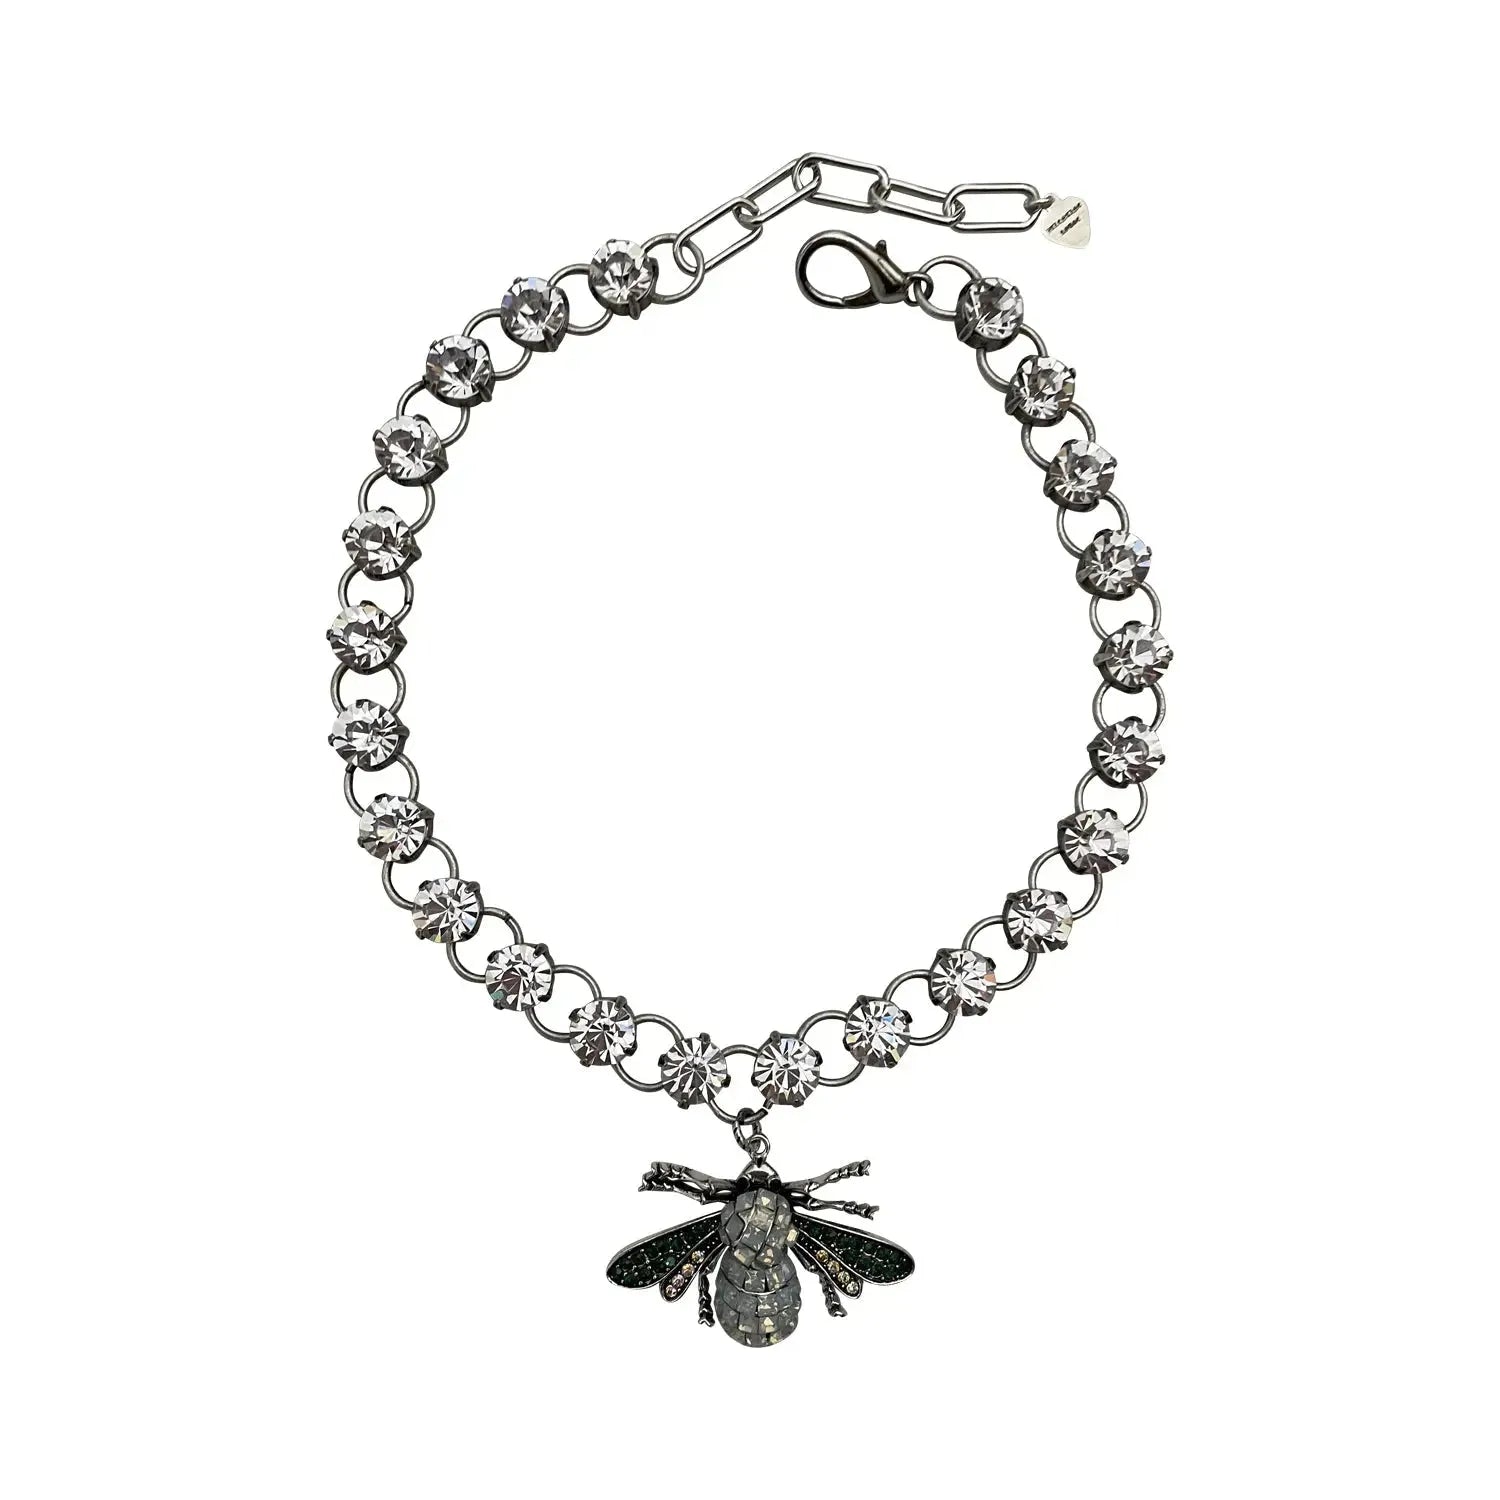 Queen Bequeen bee necklace - irredescente Swarovski Crystal Necklace - Irredescent - Image #1